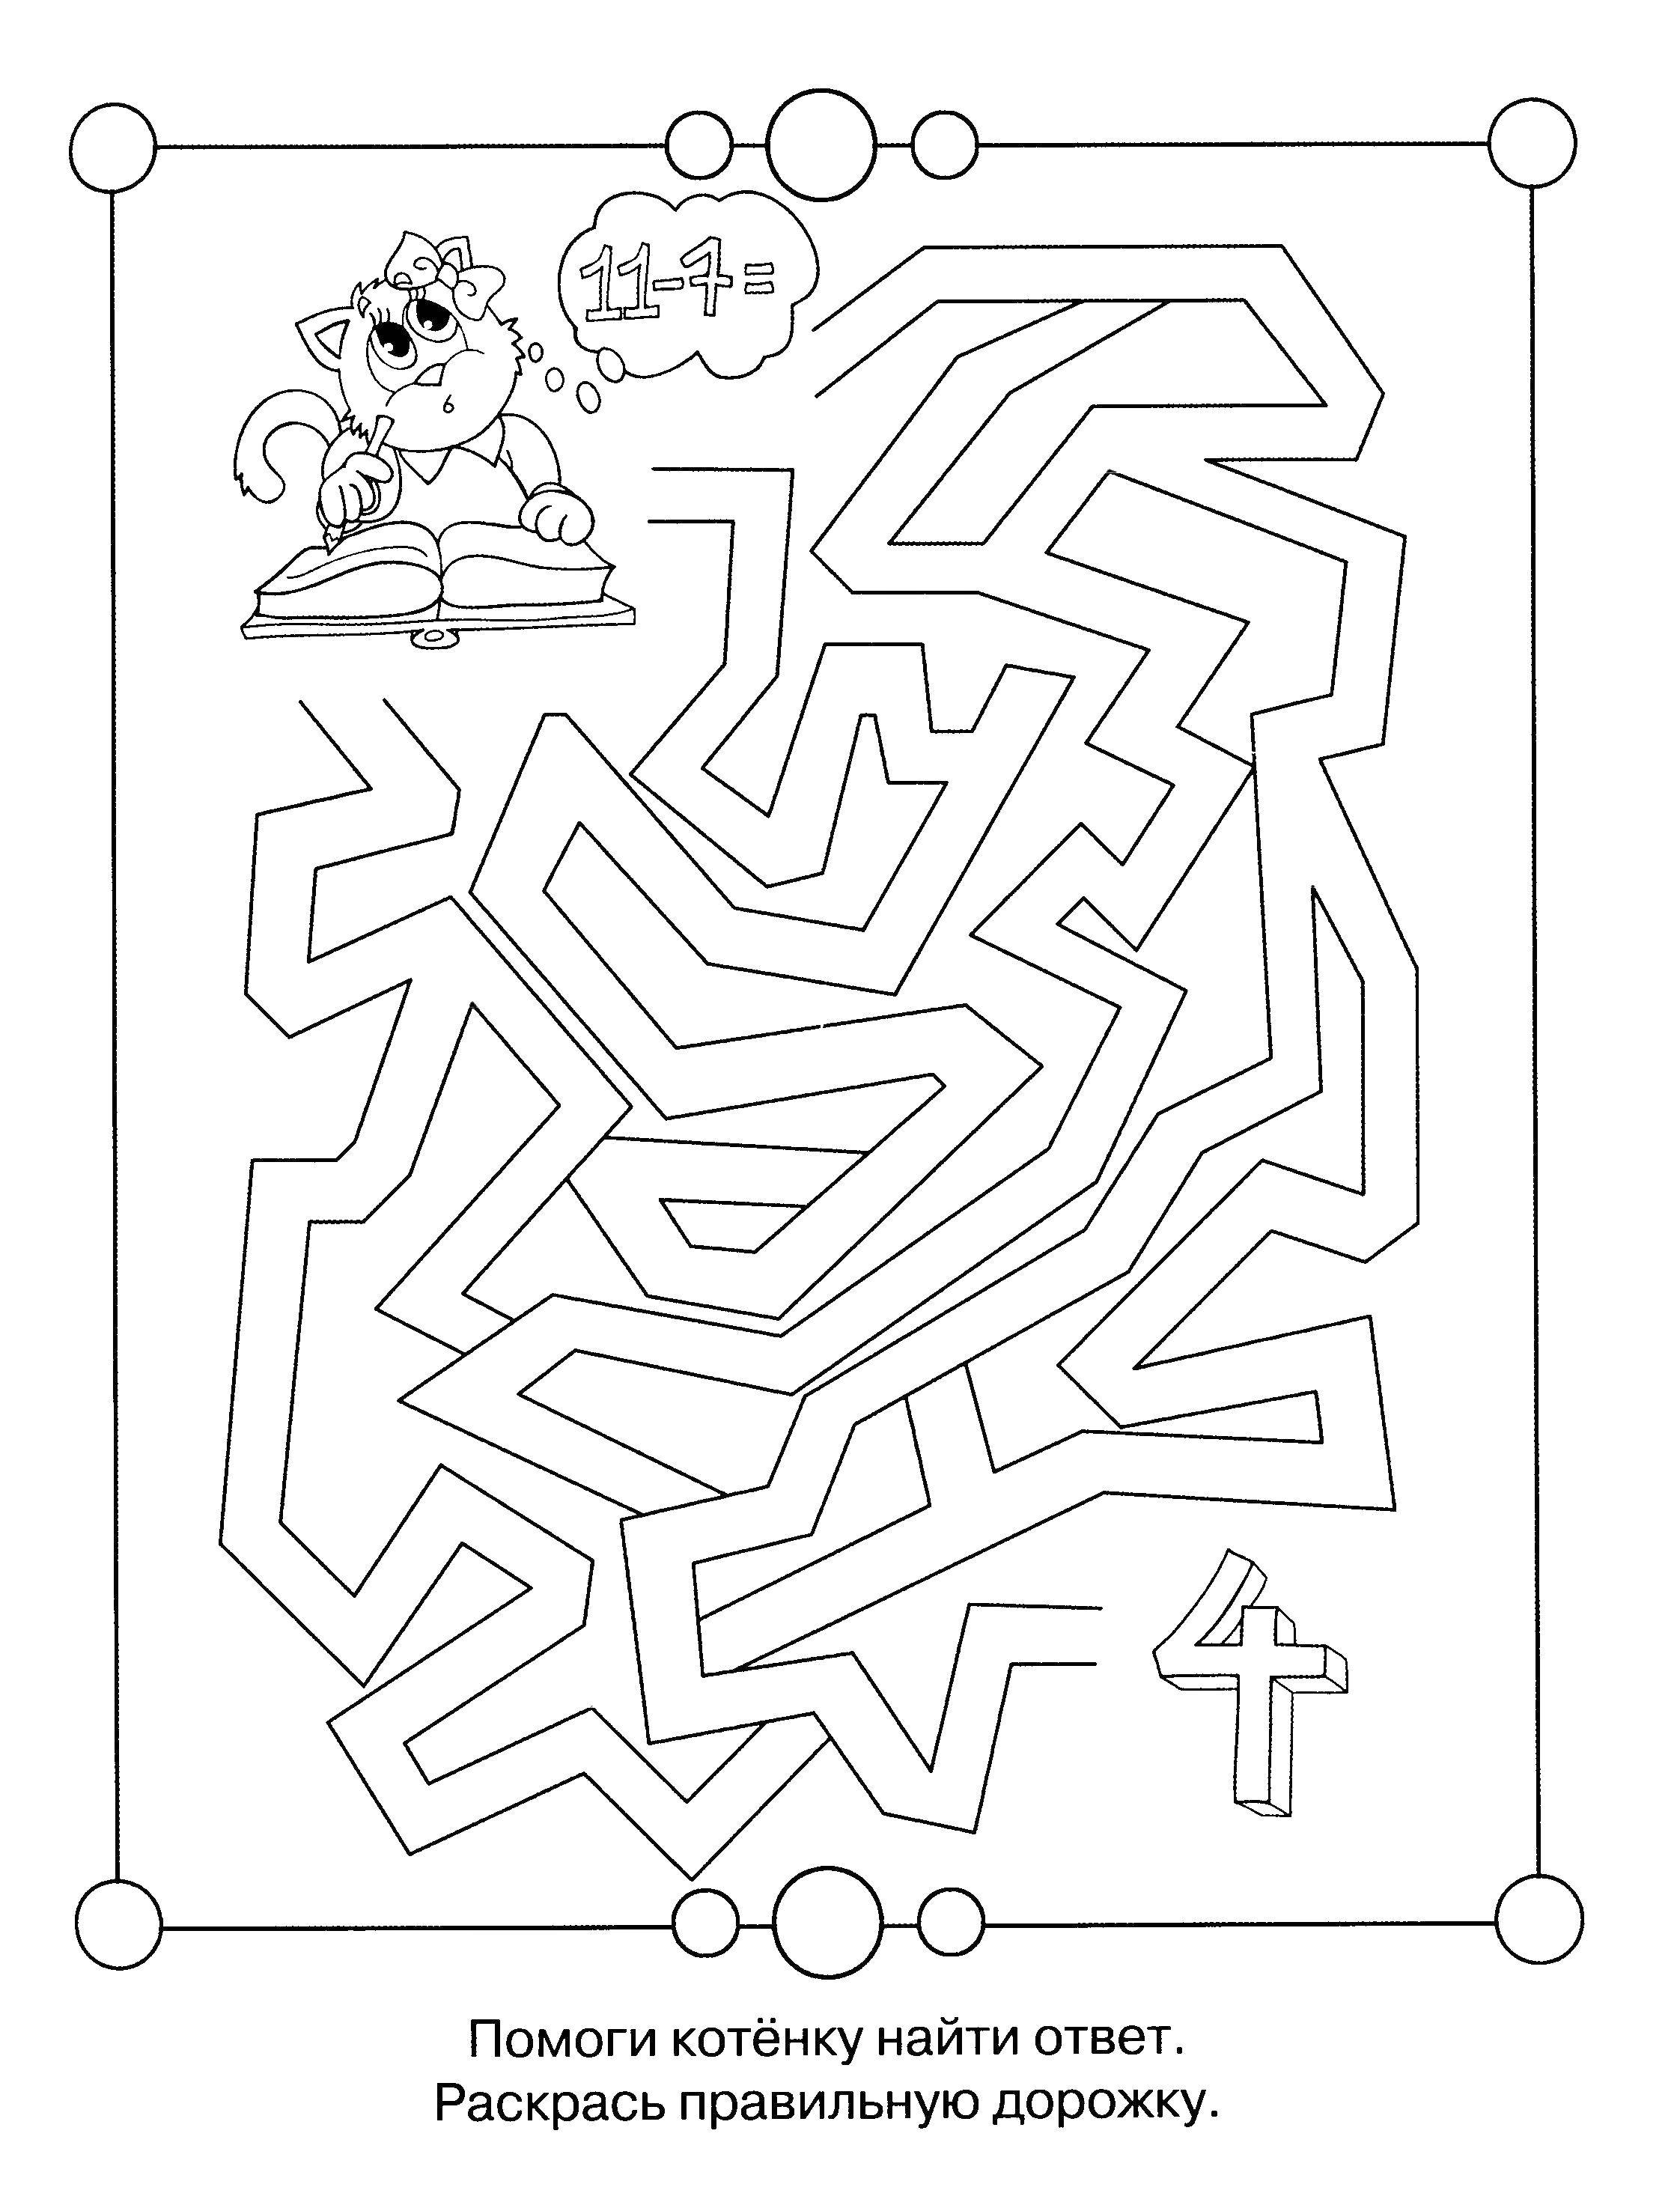 Coloring Mathematical labirintik. Category riddles for kids. Tags:  Maze, logic.